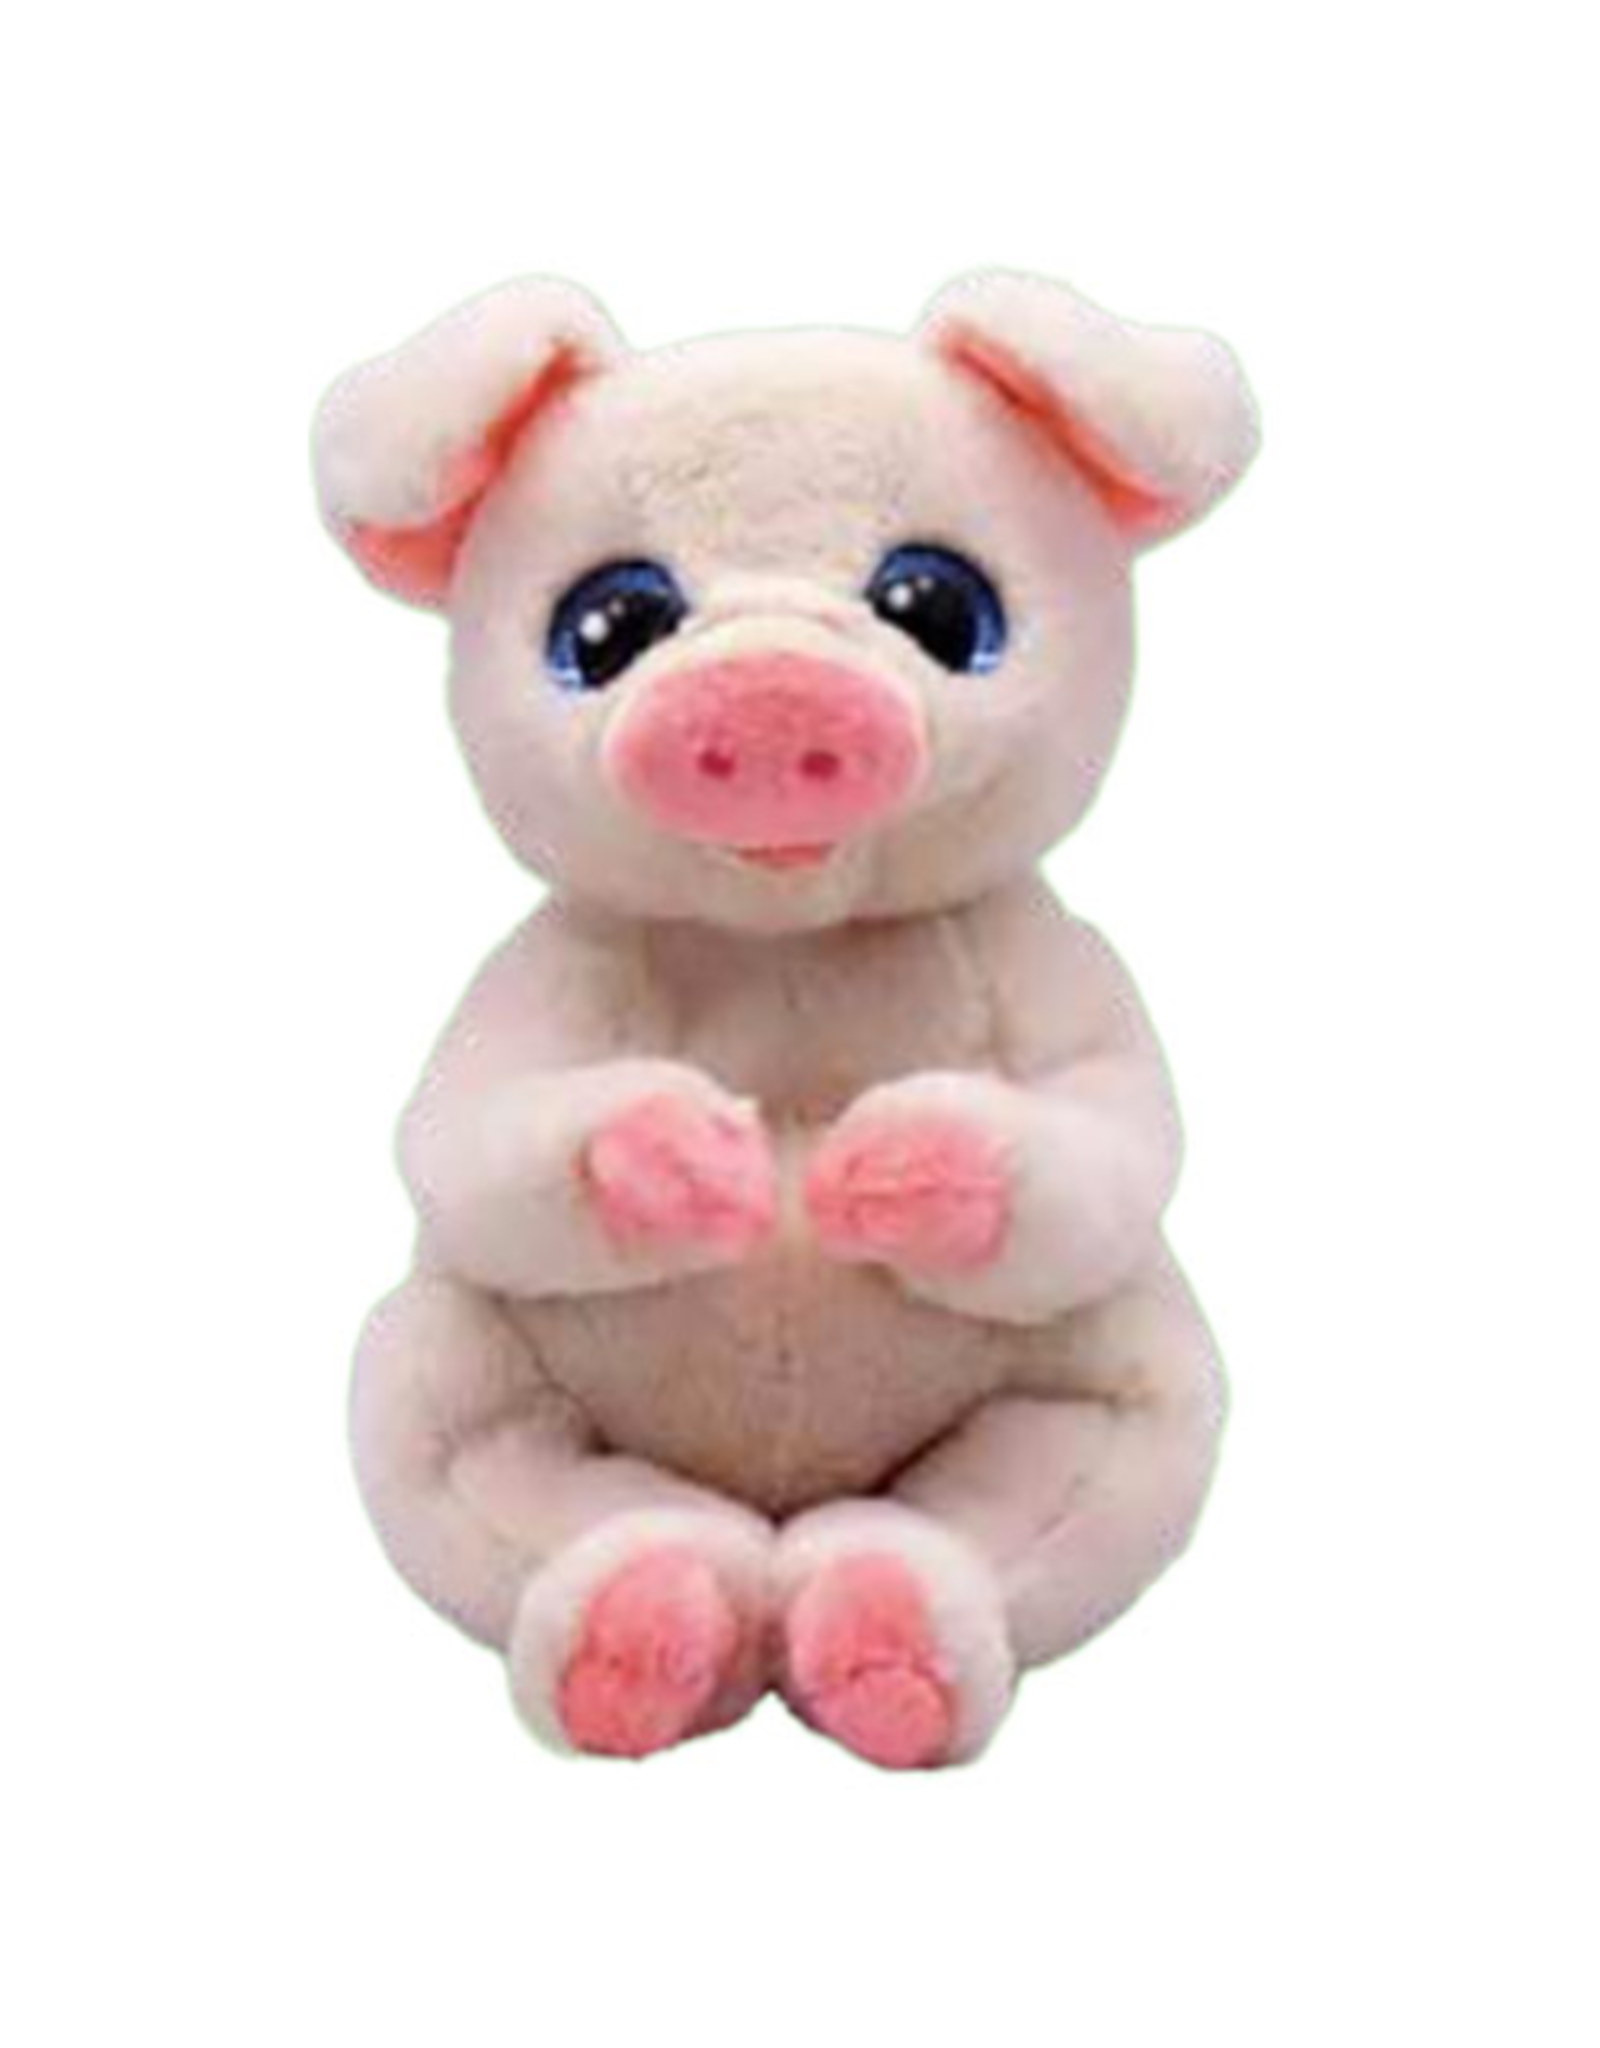 Beanie Baby: Penelope, Pig